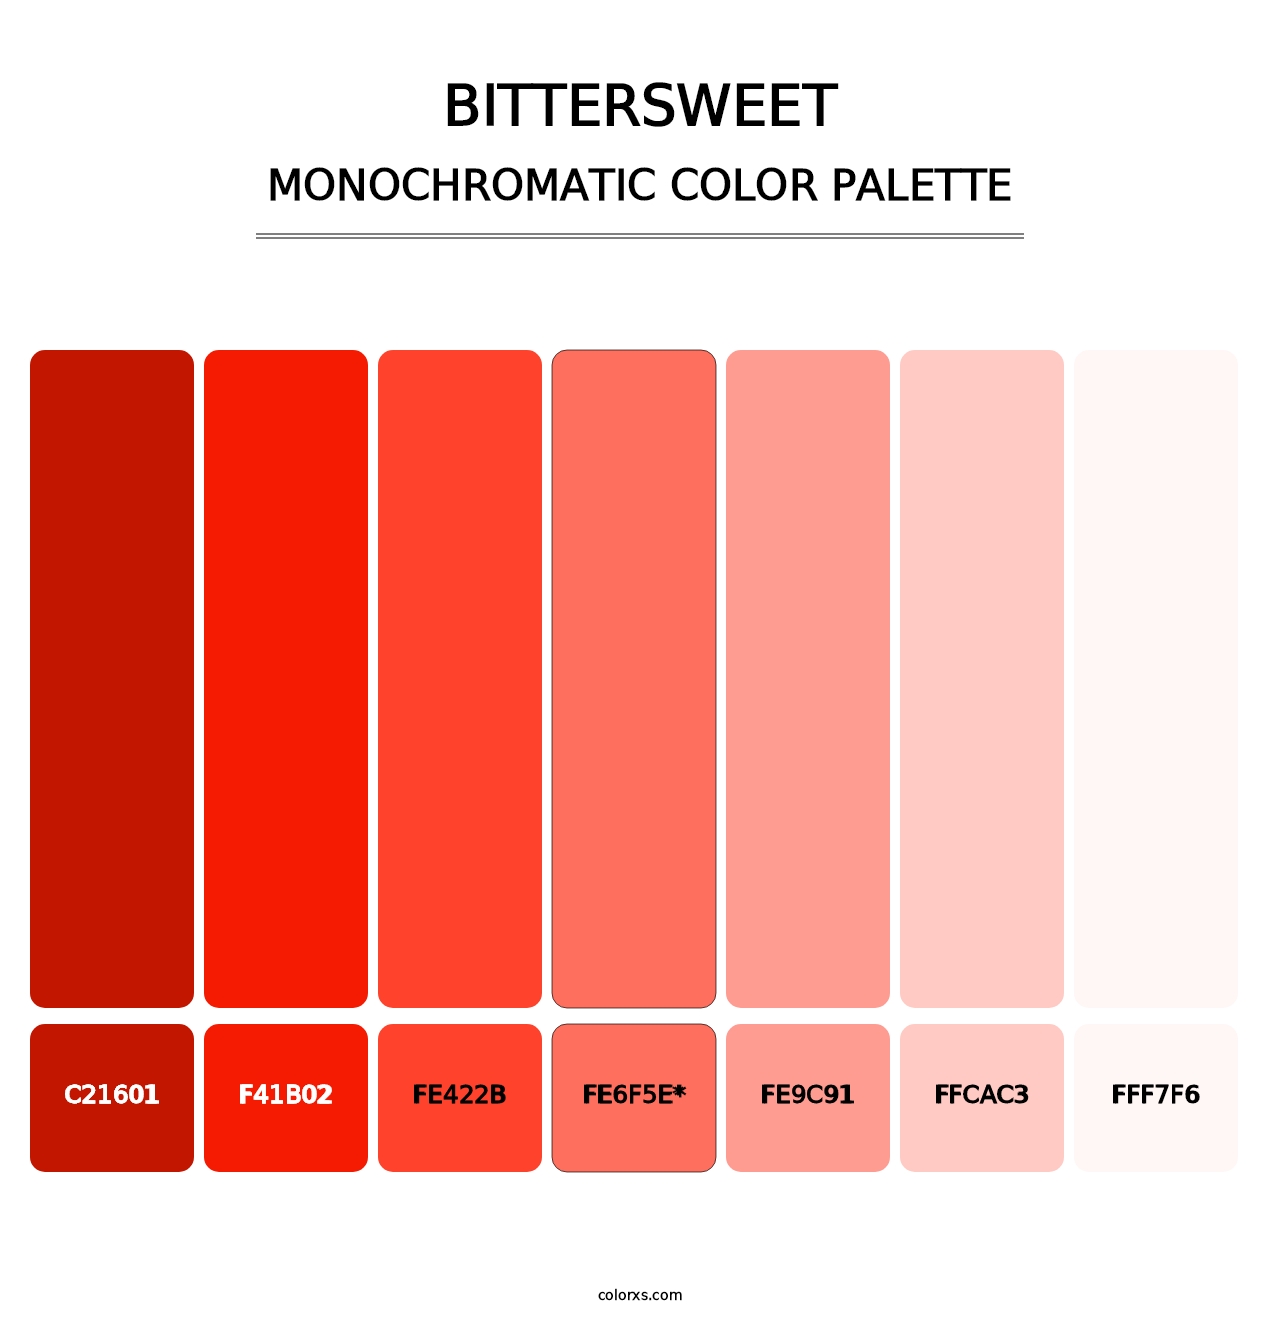 Bittersweet - Monochromatic Color Palette